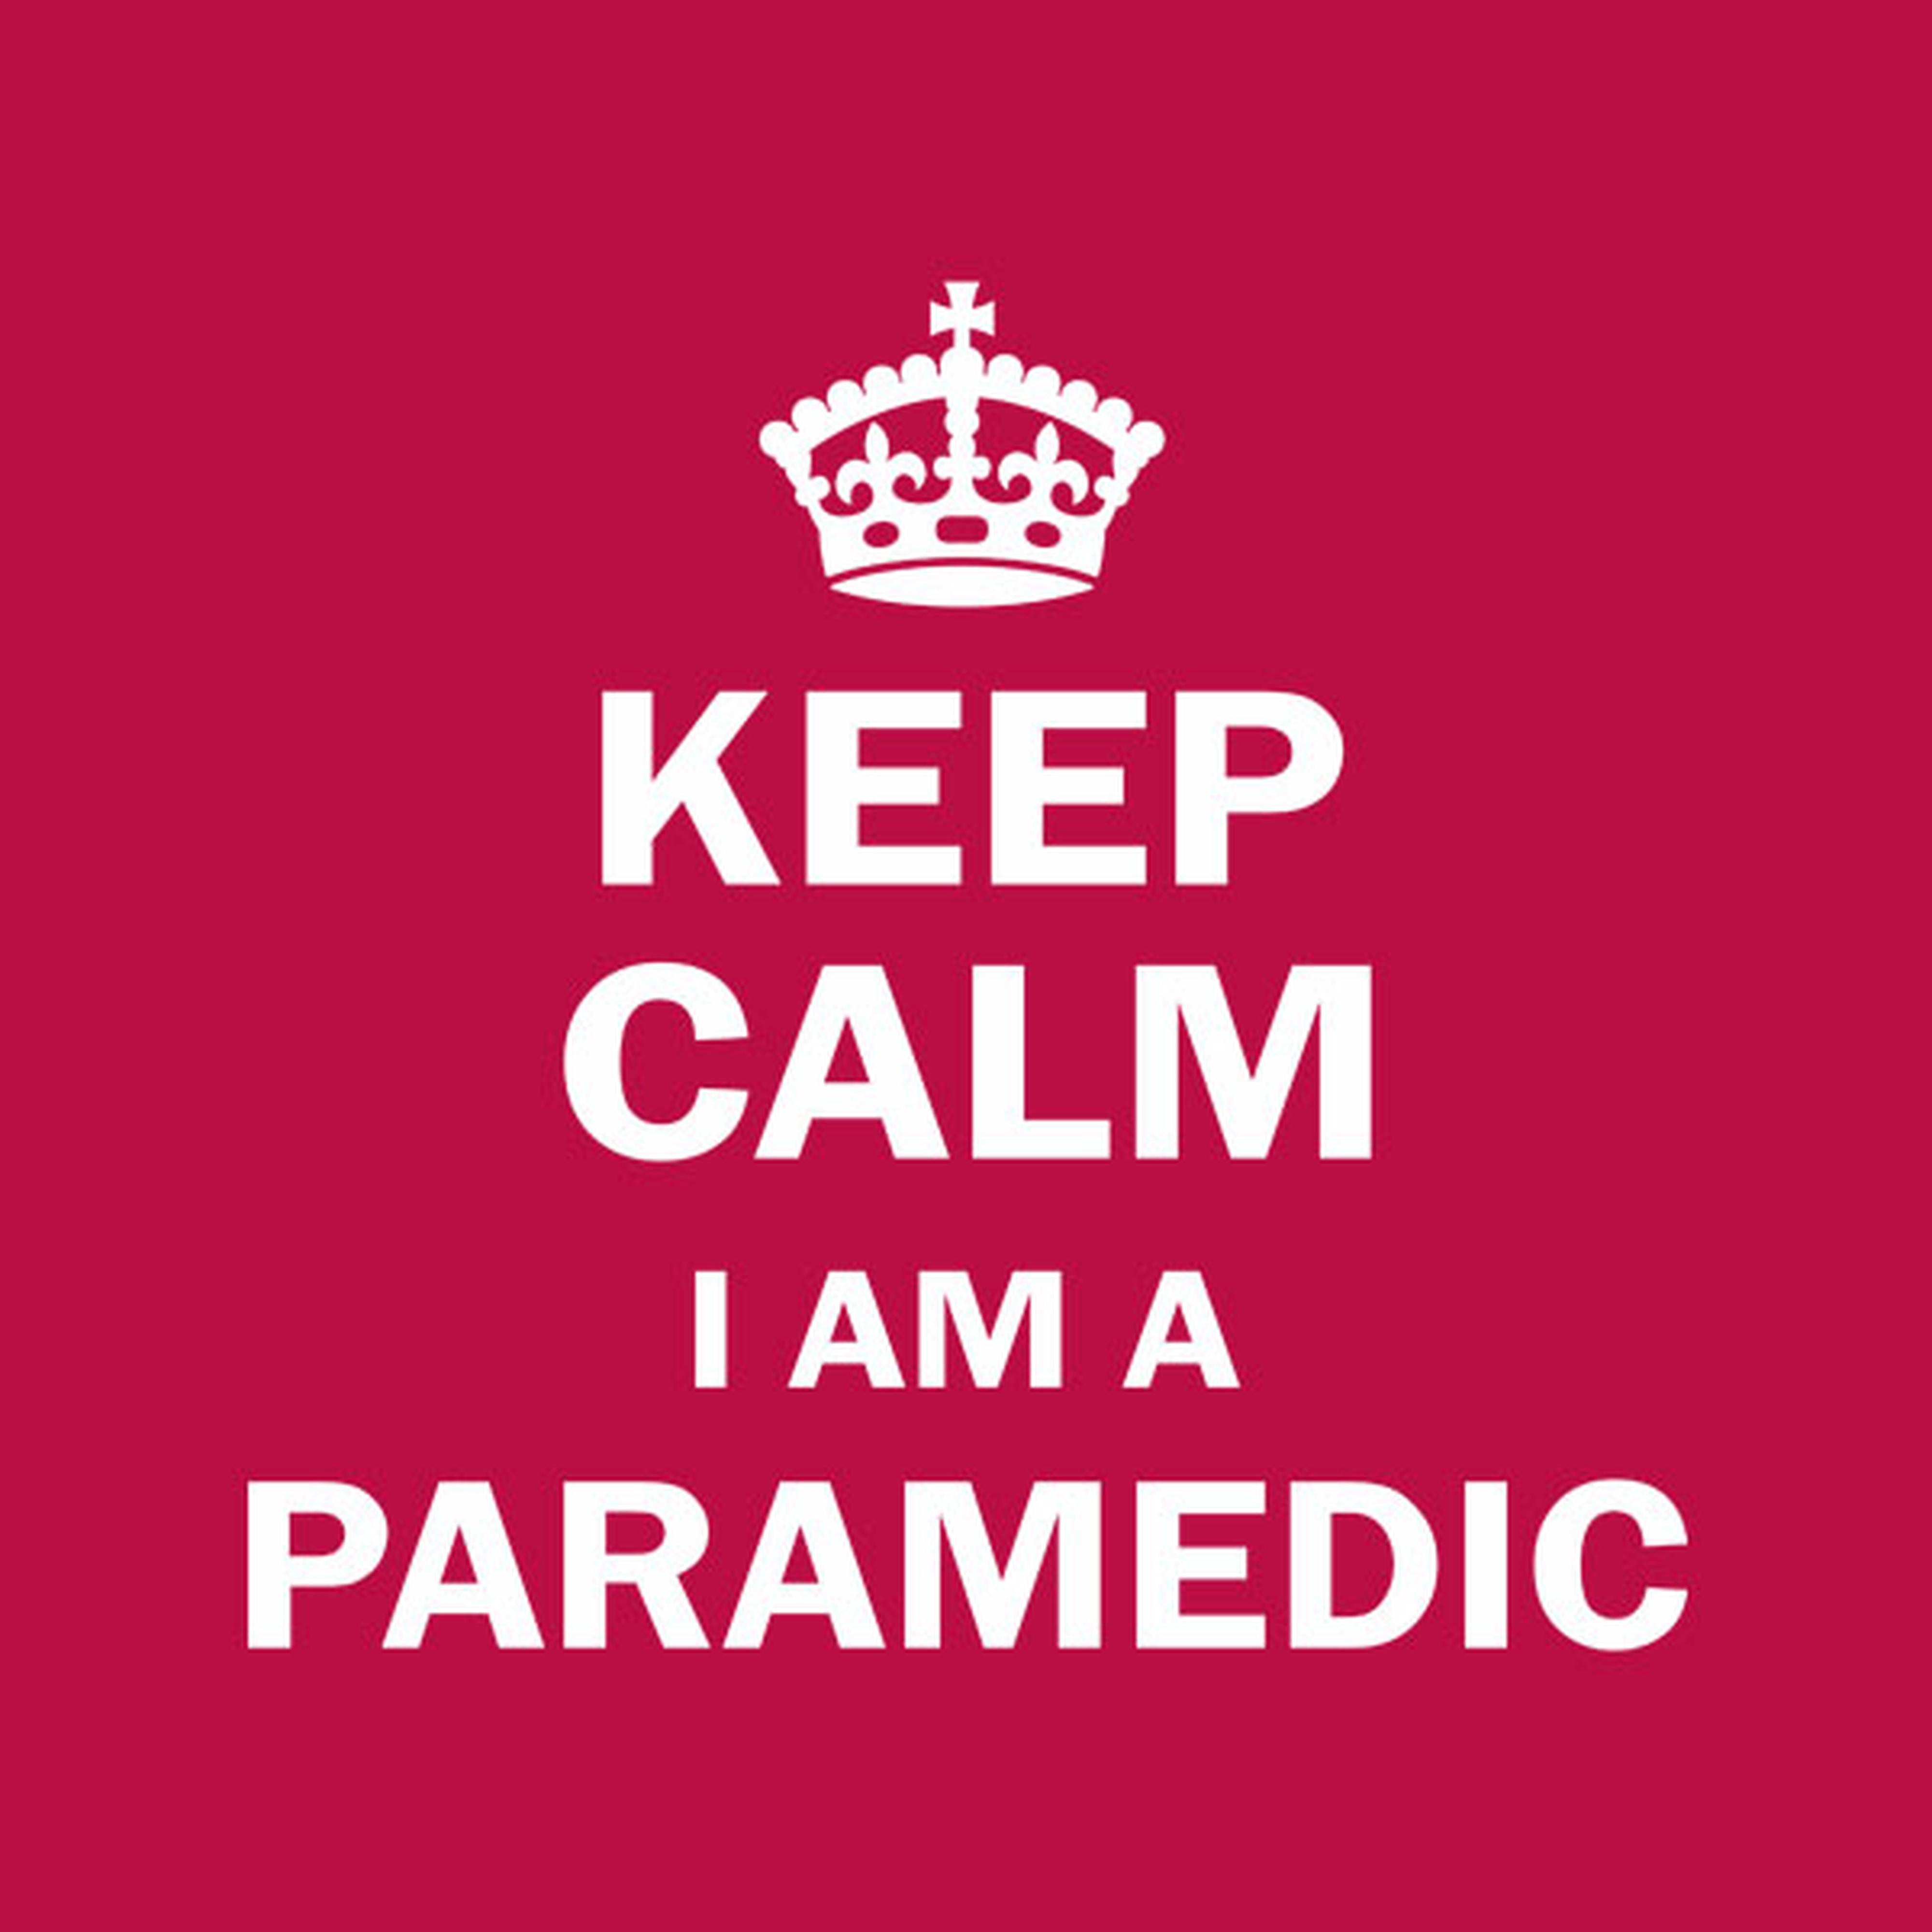 Keep calm I am a paramedic - T-shirt